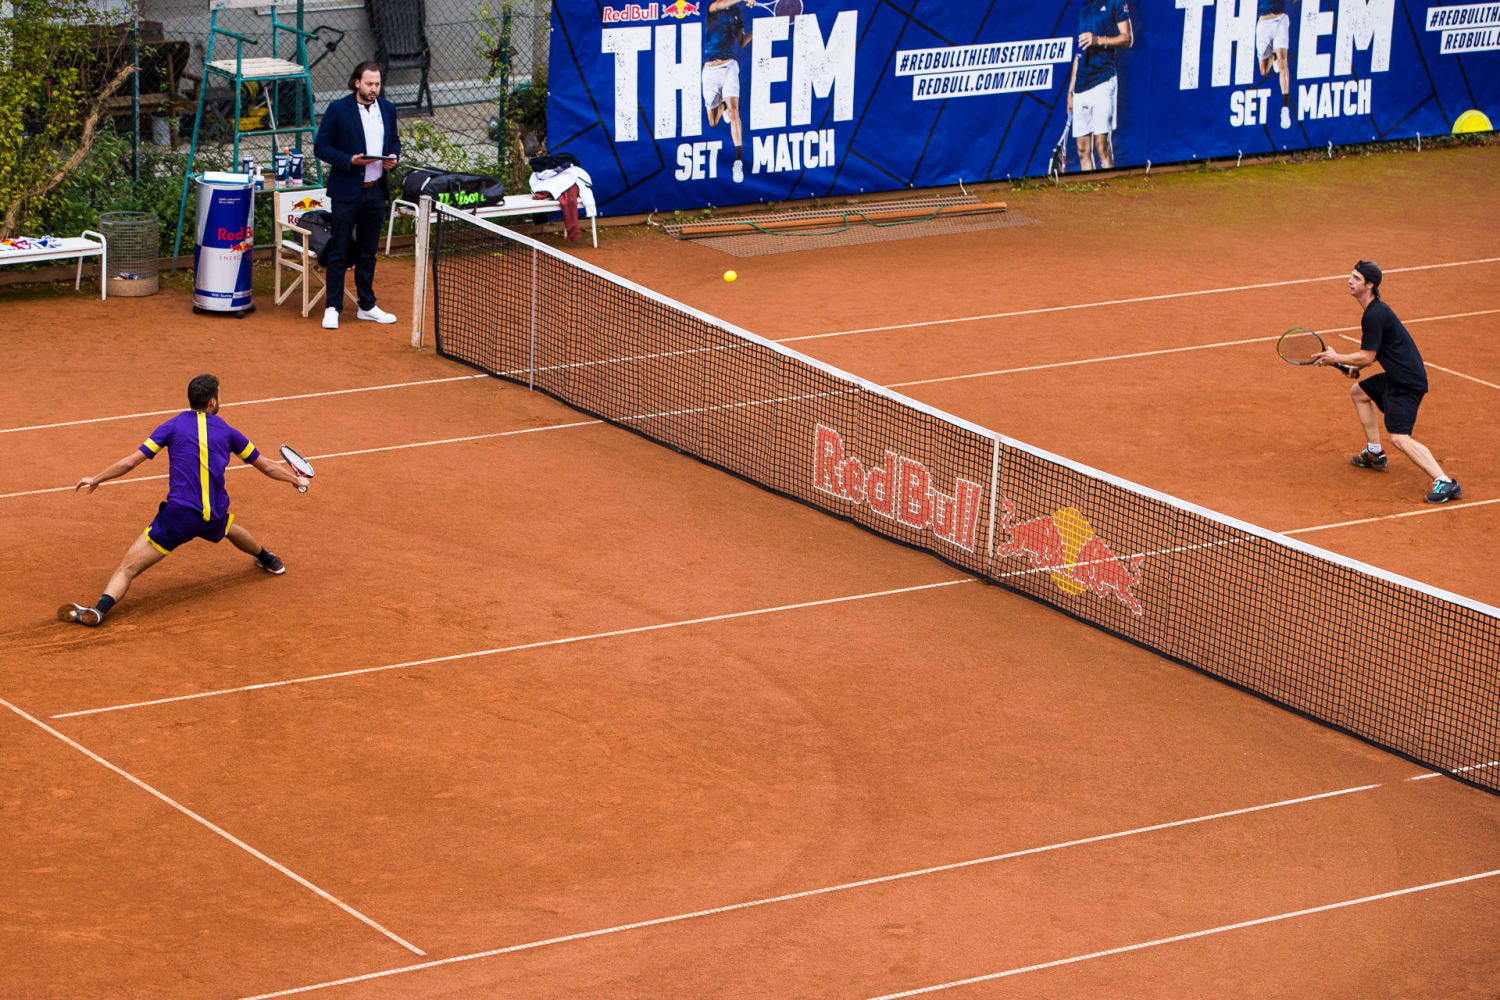 Red Bull Thiem, Set, Match Finale auf dem Center-Court